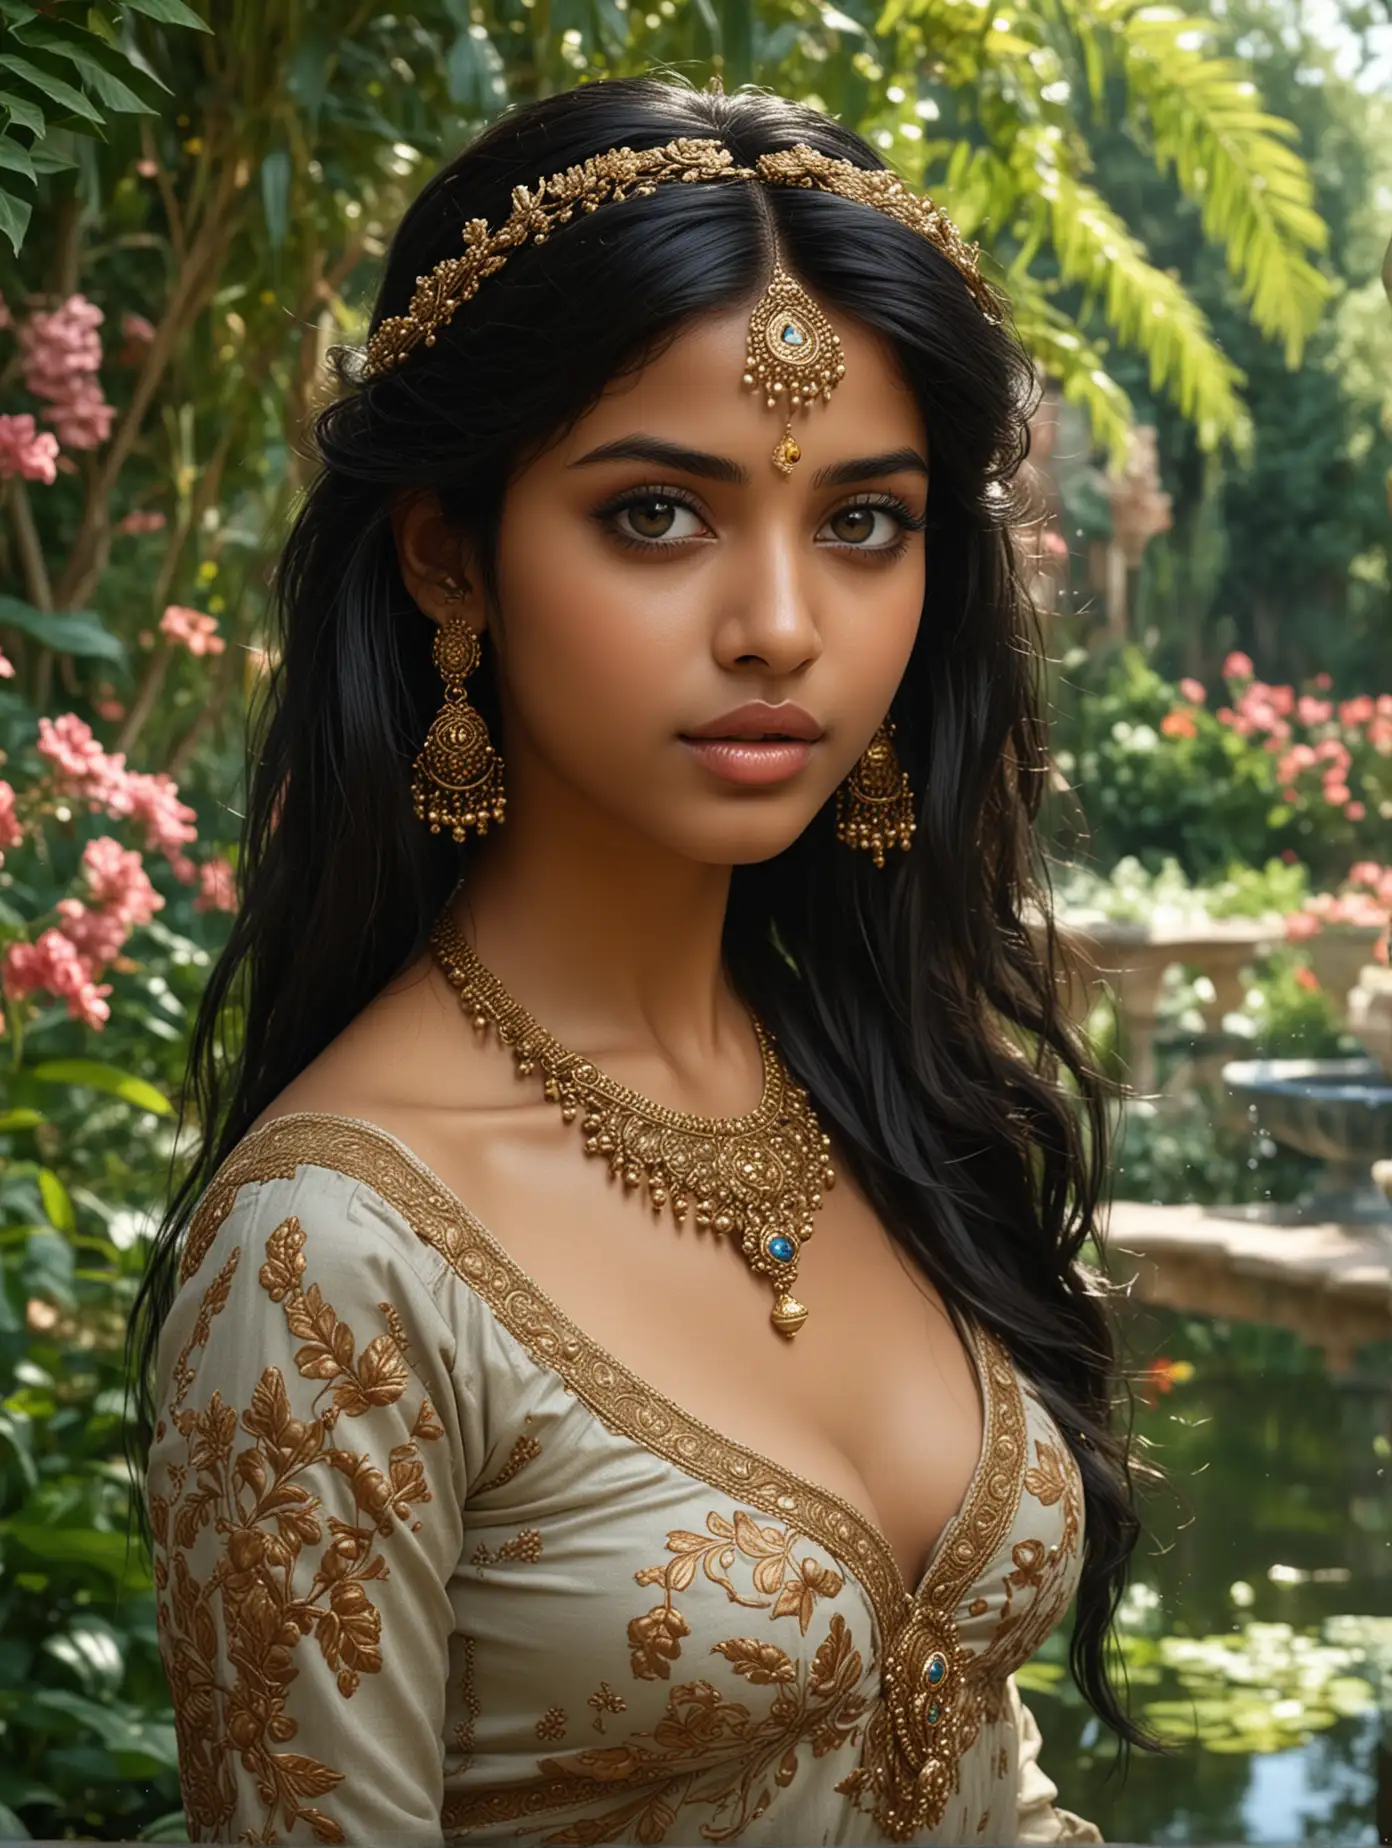 Exotic-Tamil-Princess-in-Lush-Garden-Oasis-Hyperrealistic-32K-Art